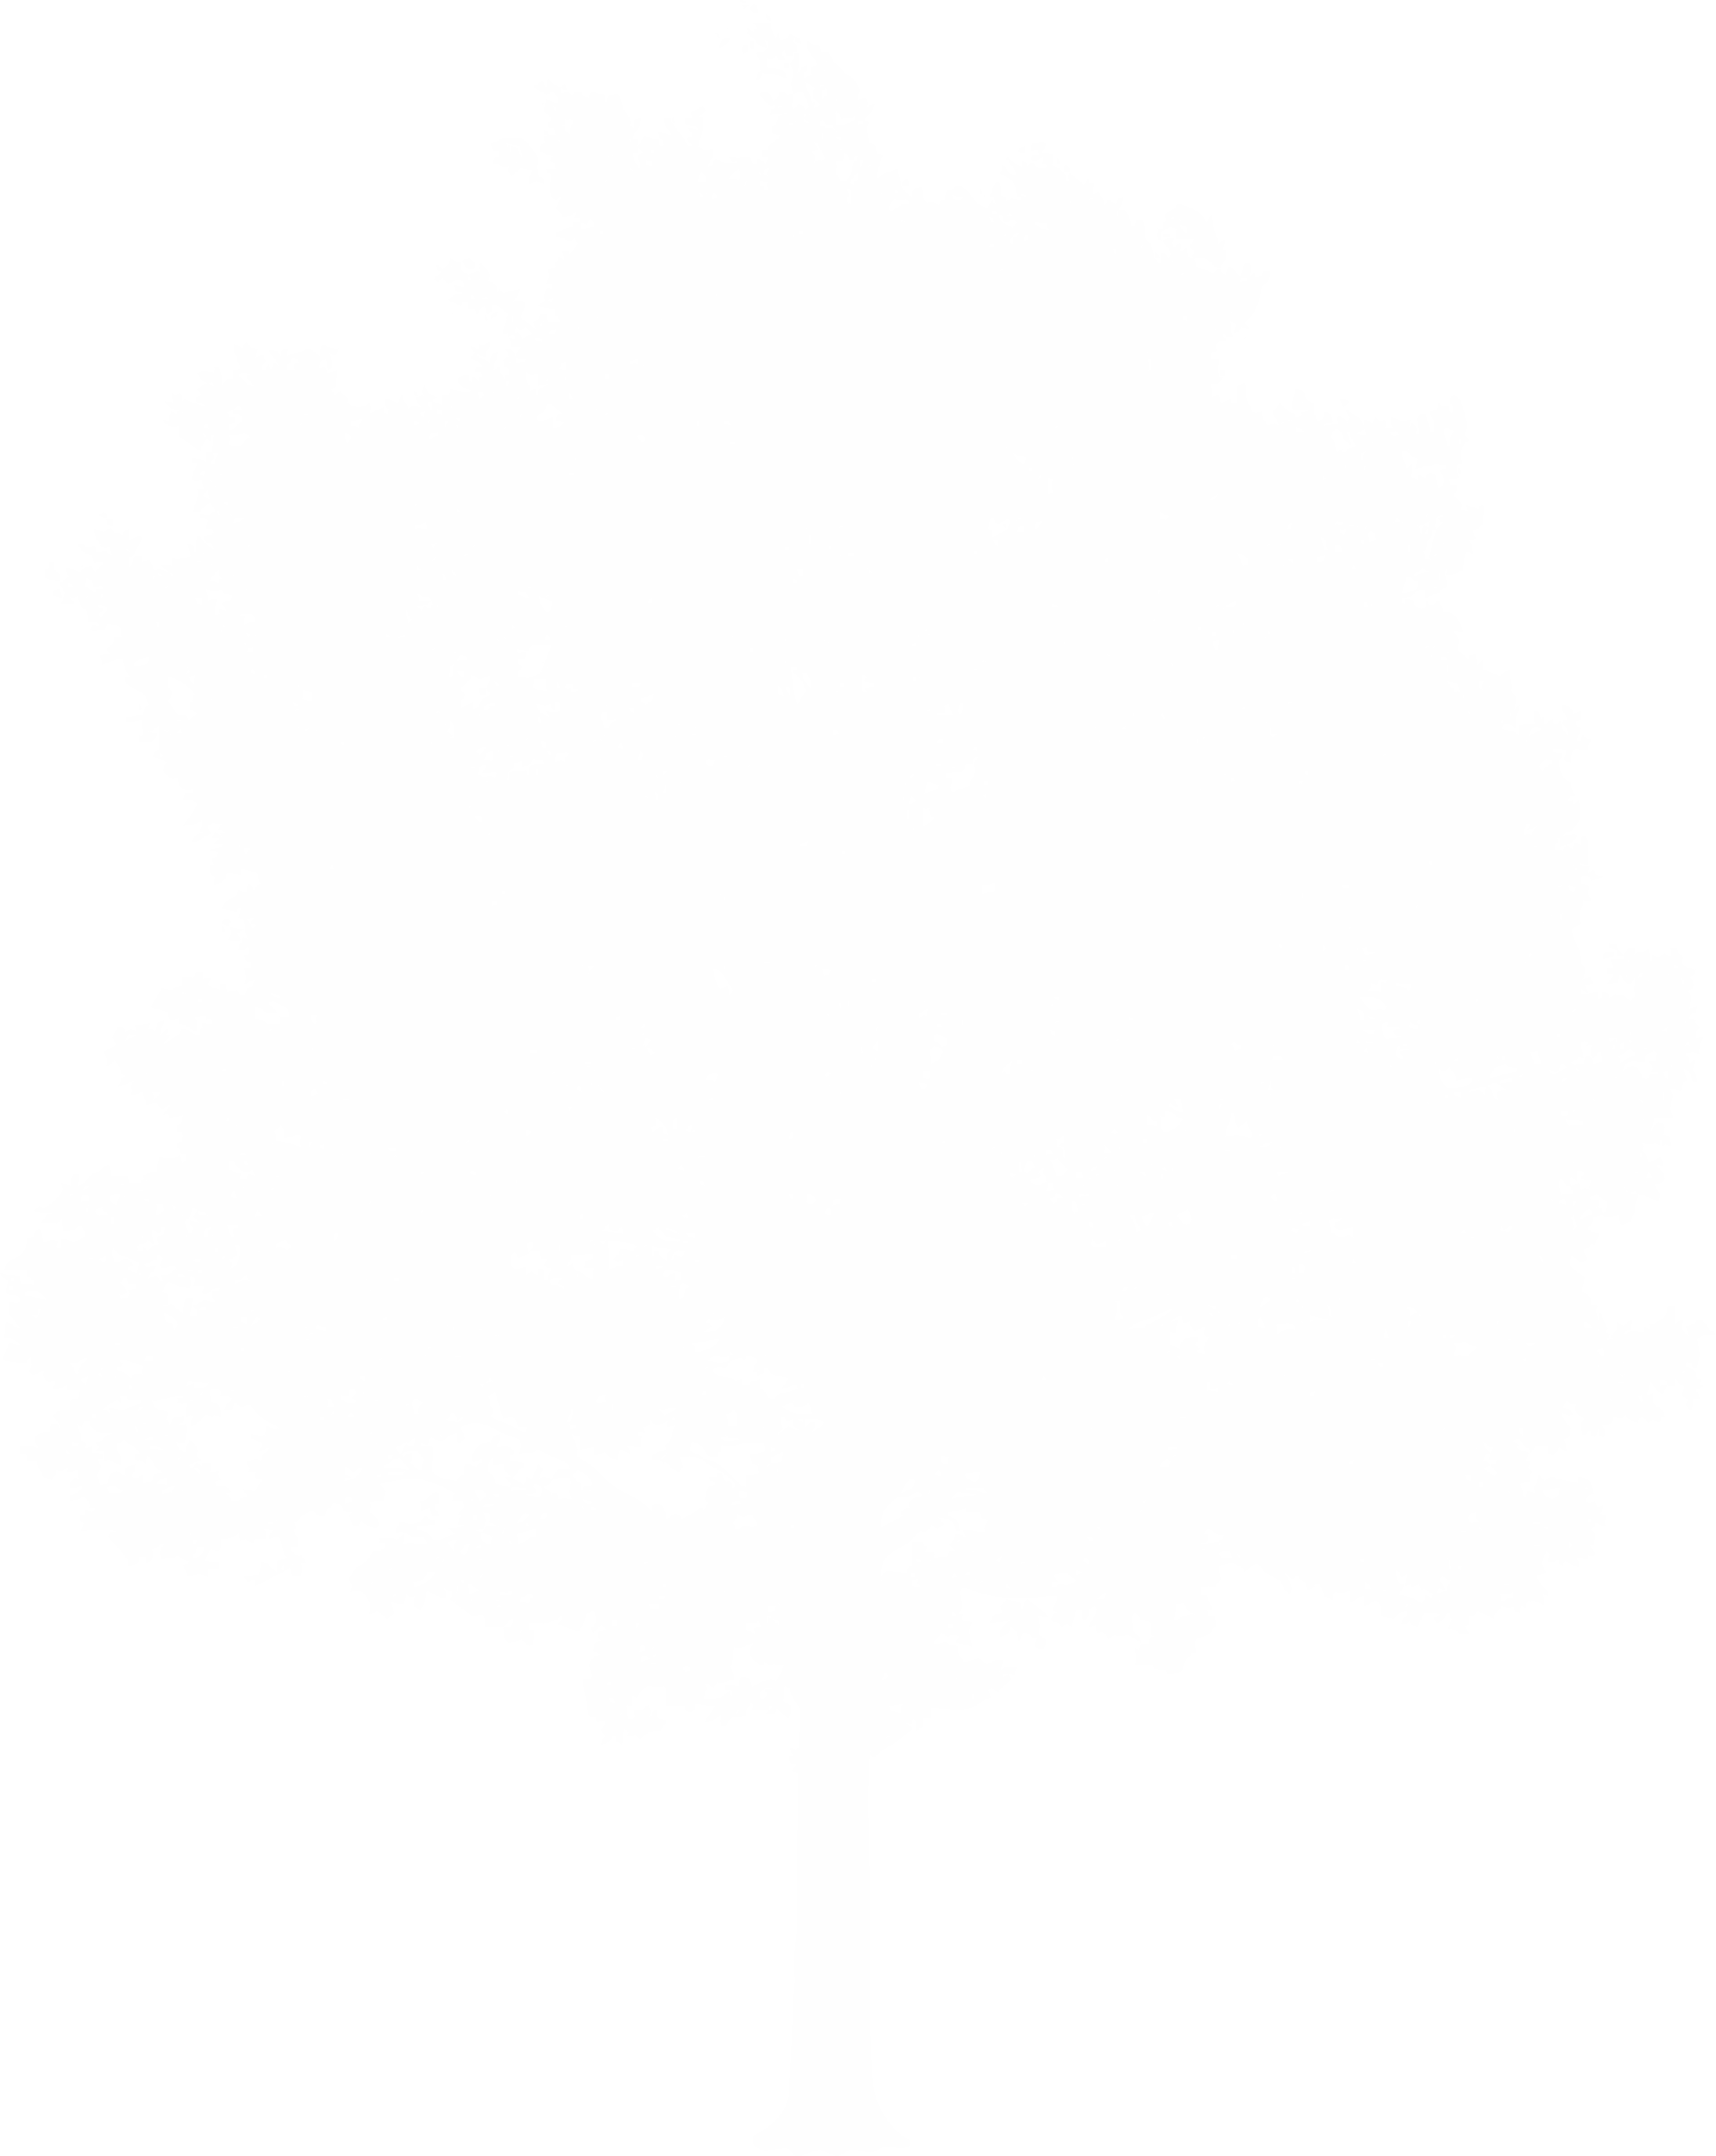 Tree - Pakhtunkhwa milli awami party electoral symbol